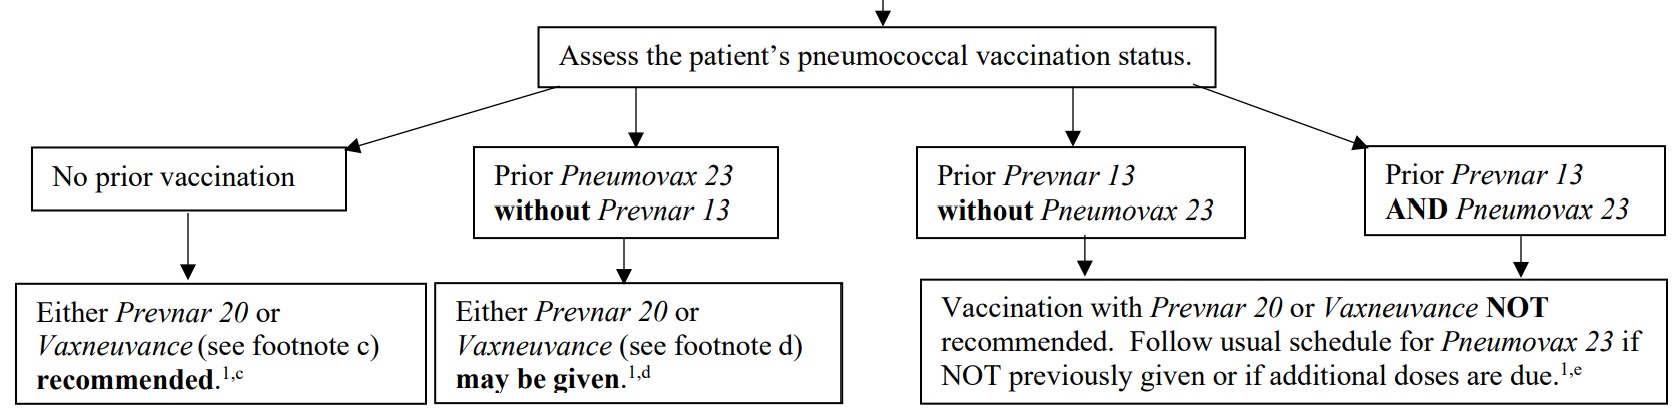 PNA vaccine algorithm